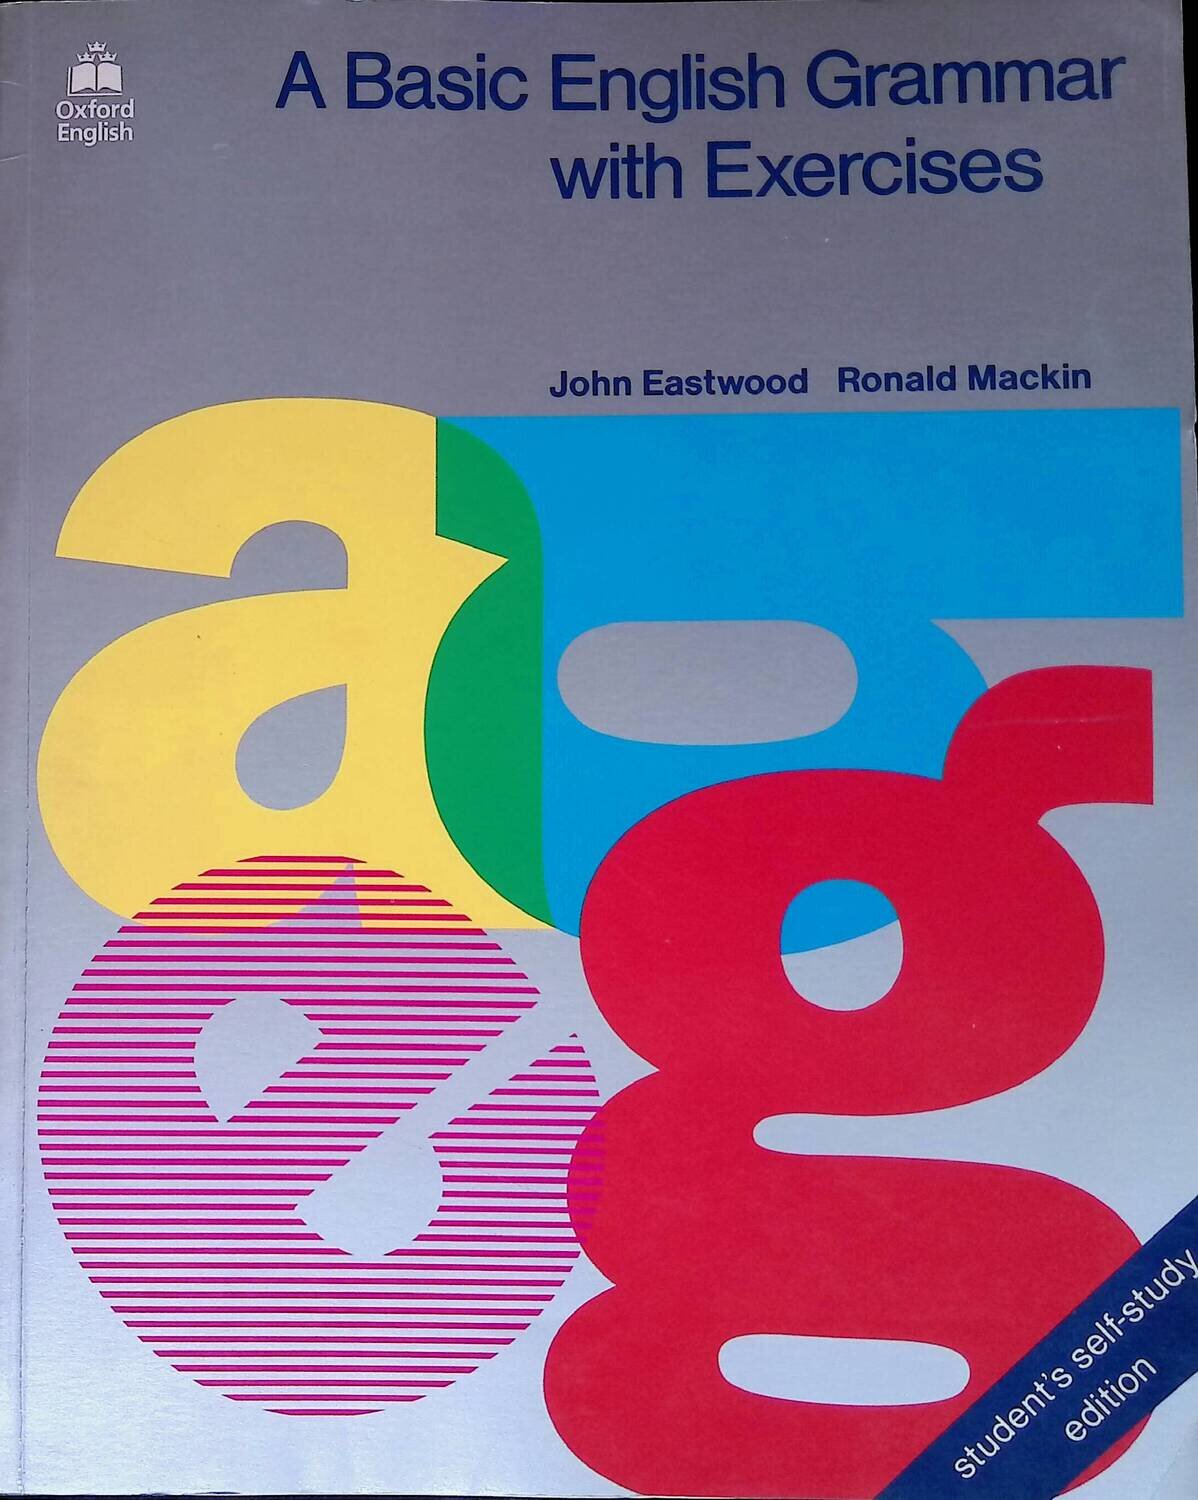 A Basic English Grammar: With Exercises and Key; John Eastwood, Ronald Mackin